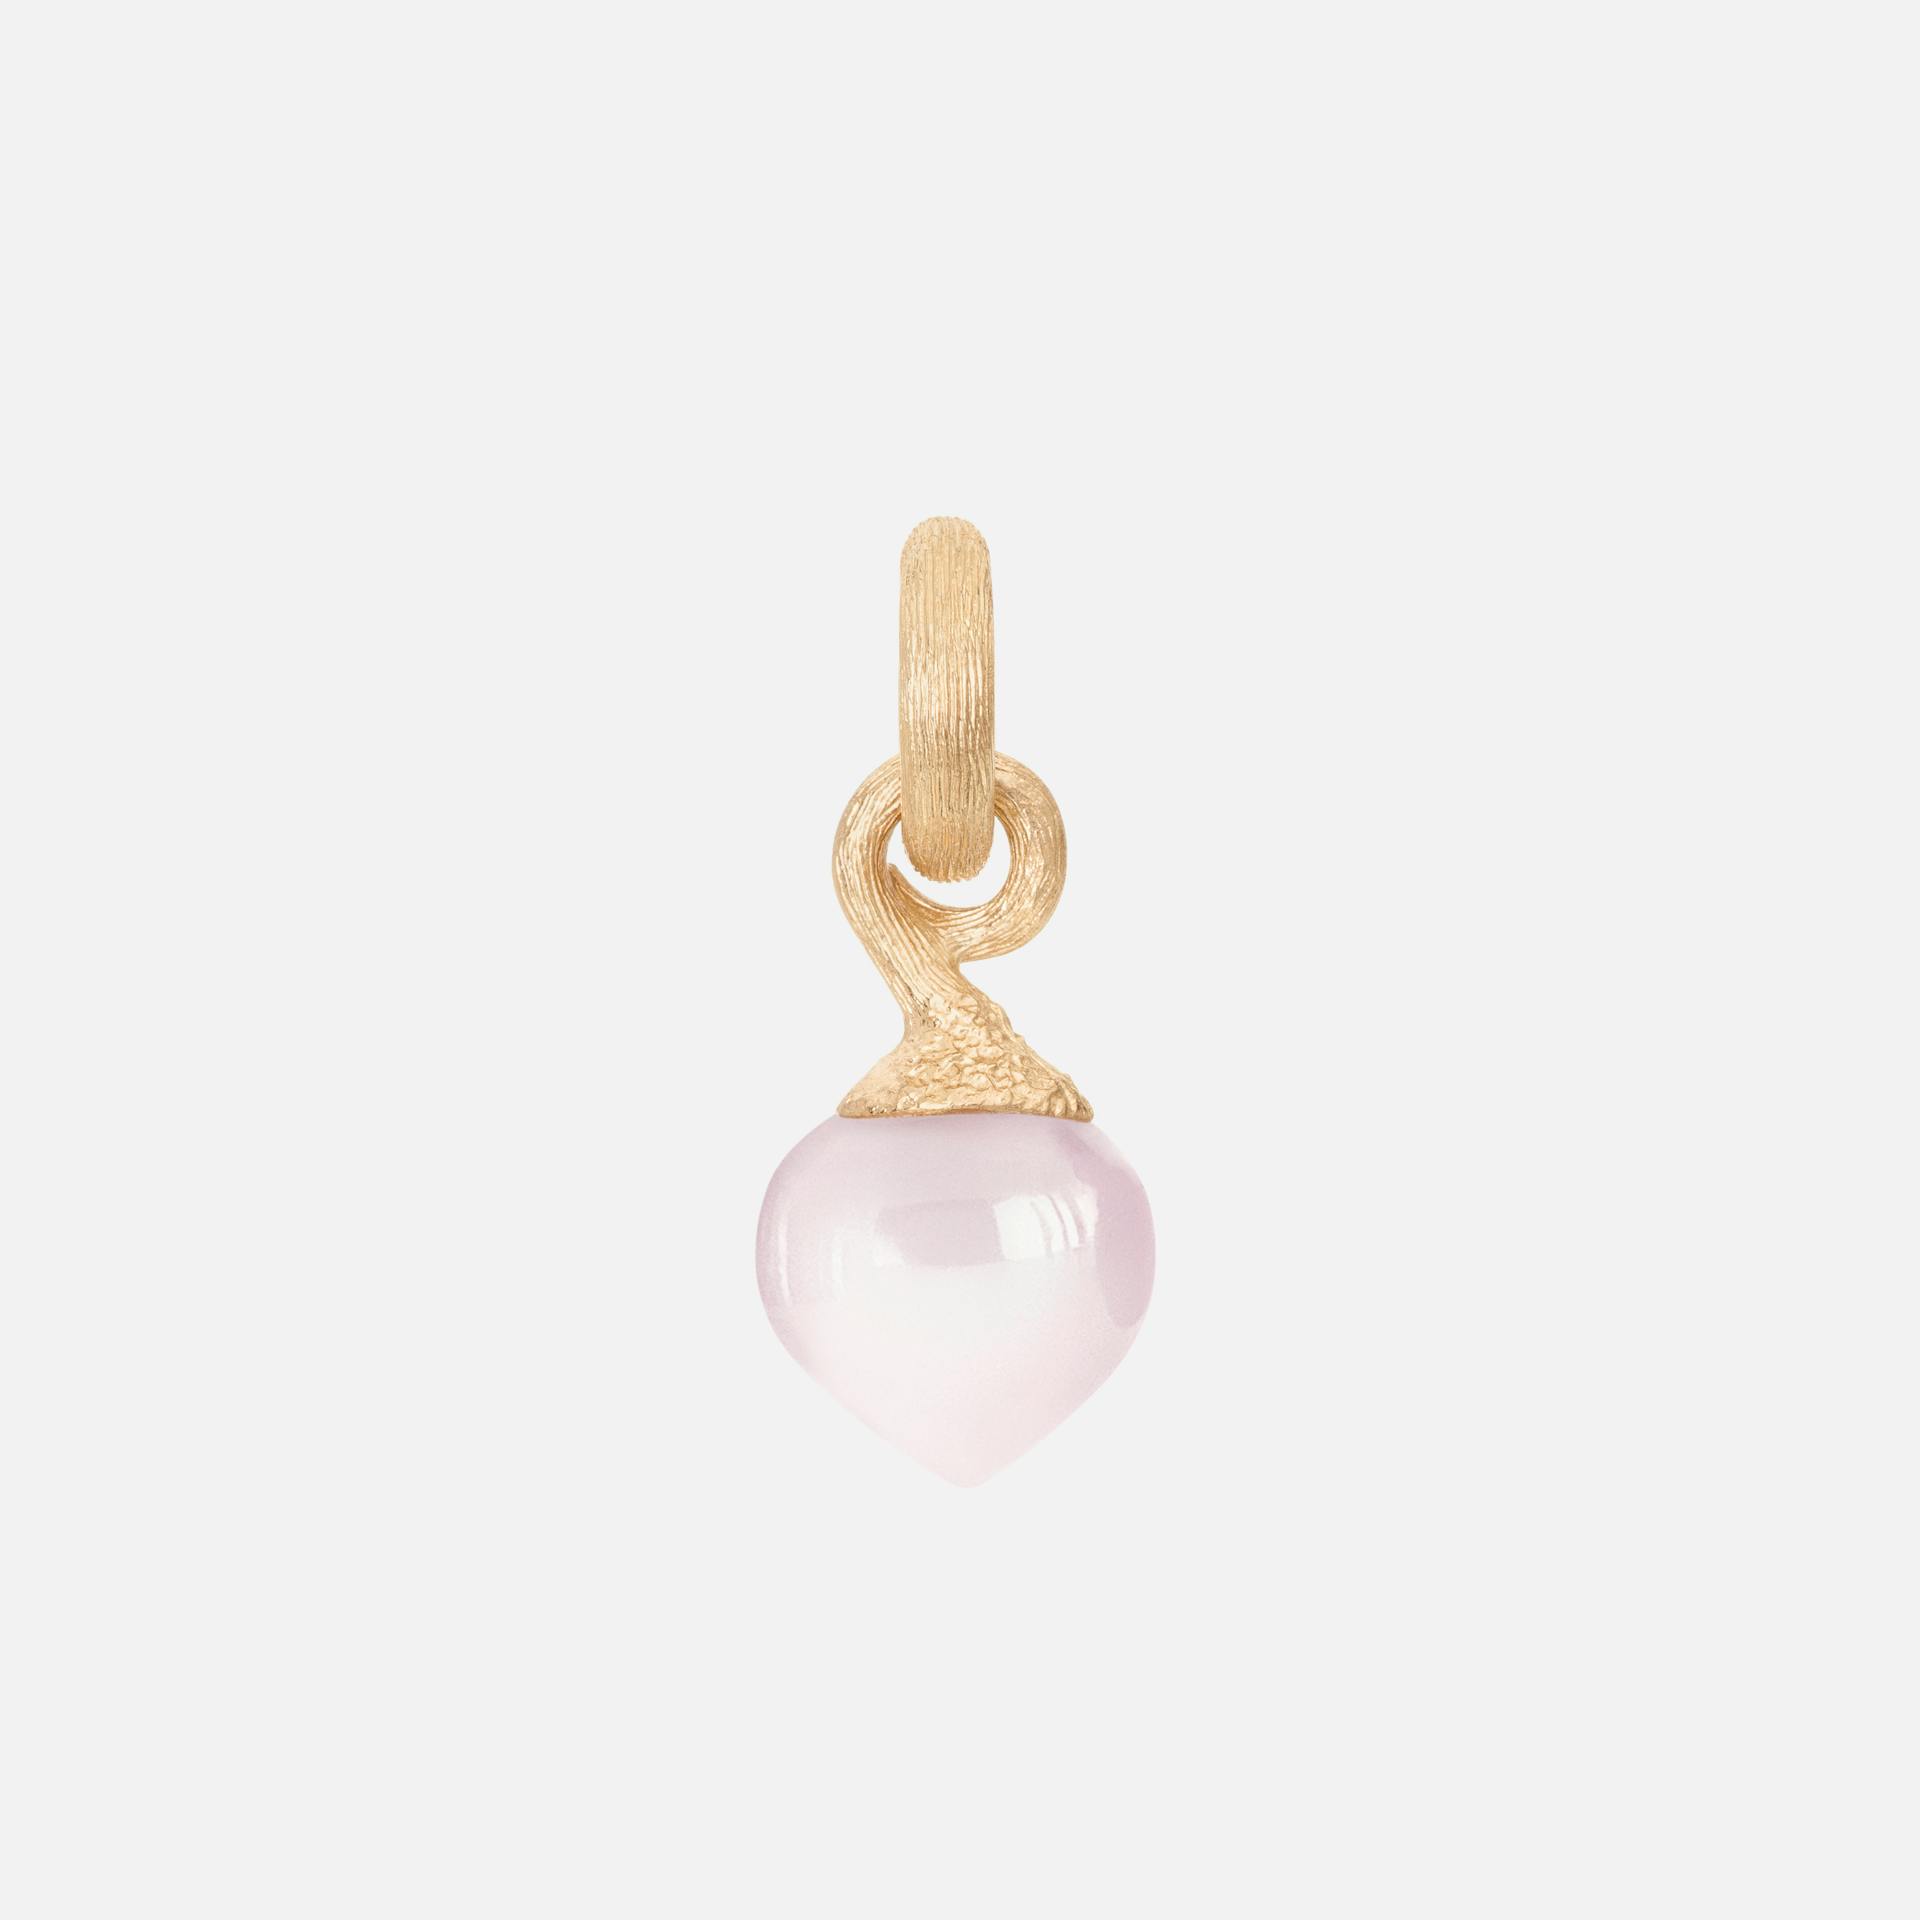 Sweet drops charm 18k gold with rose quartz